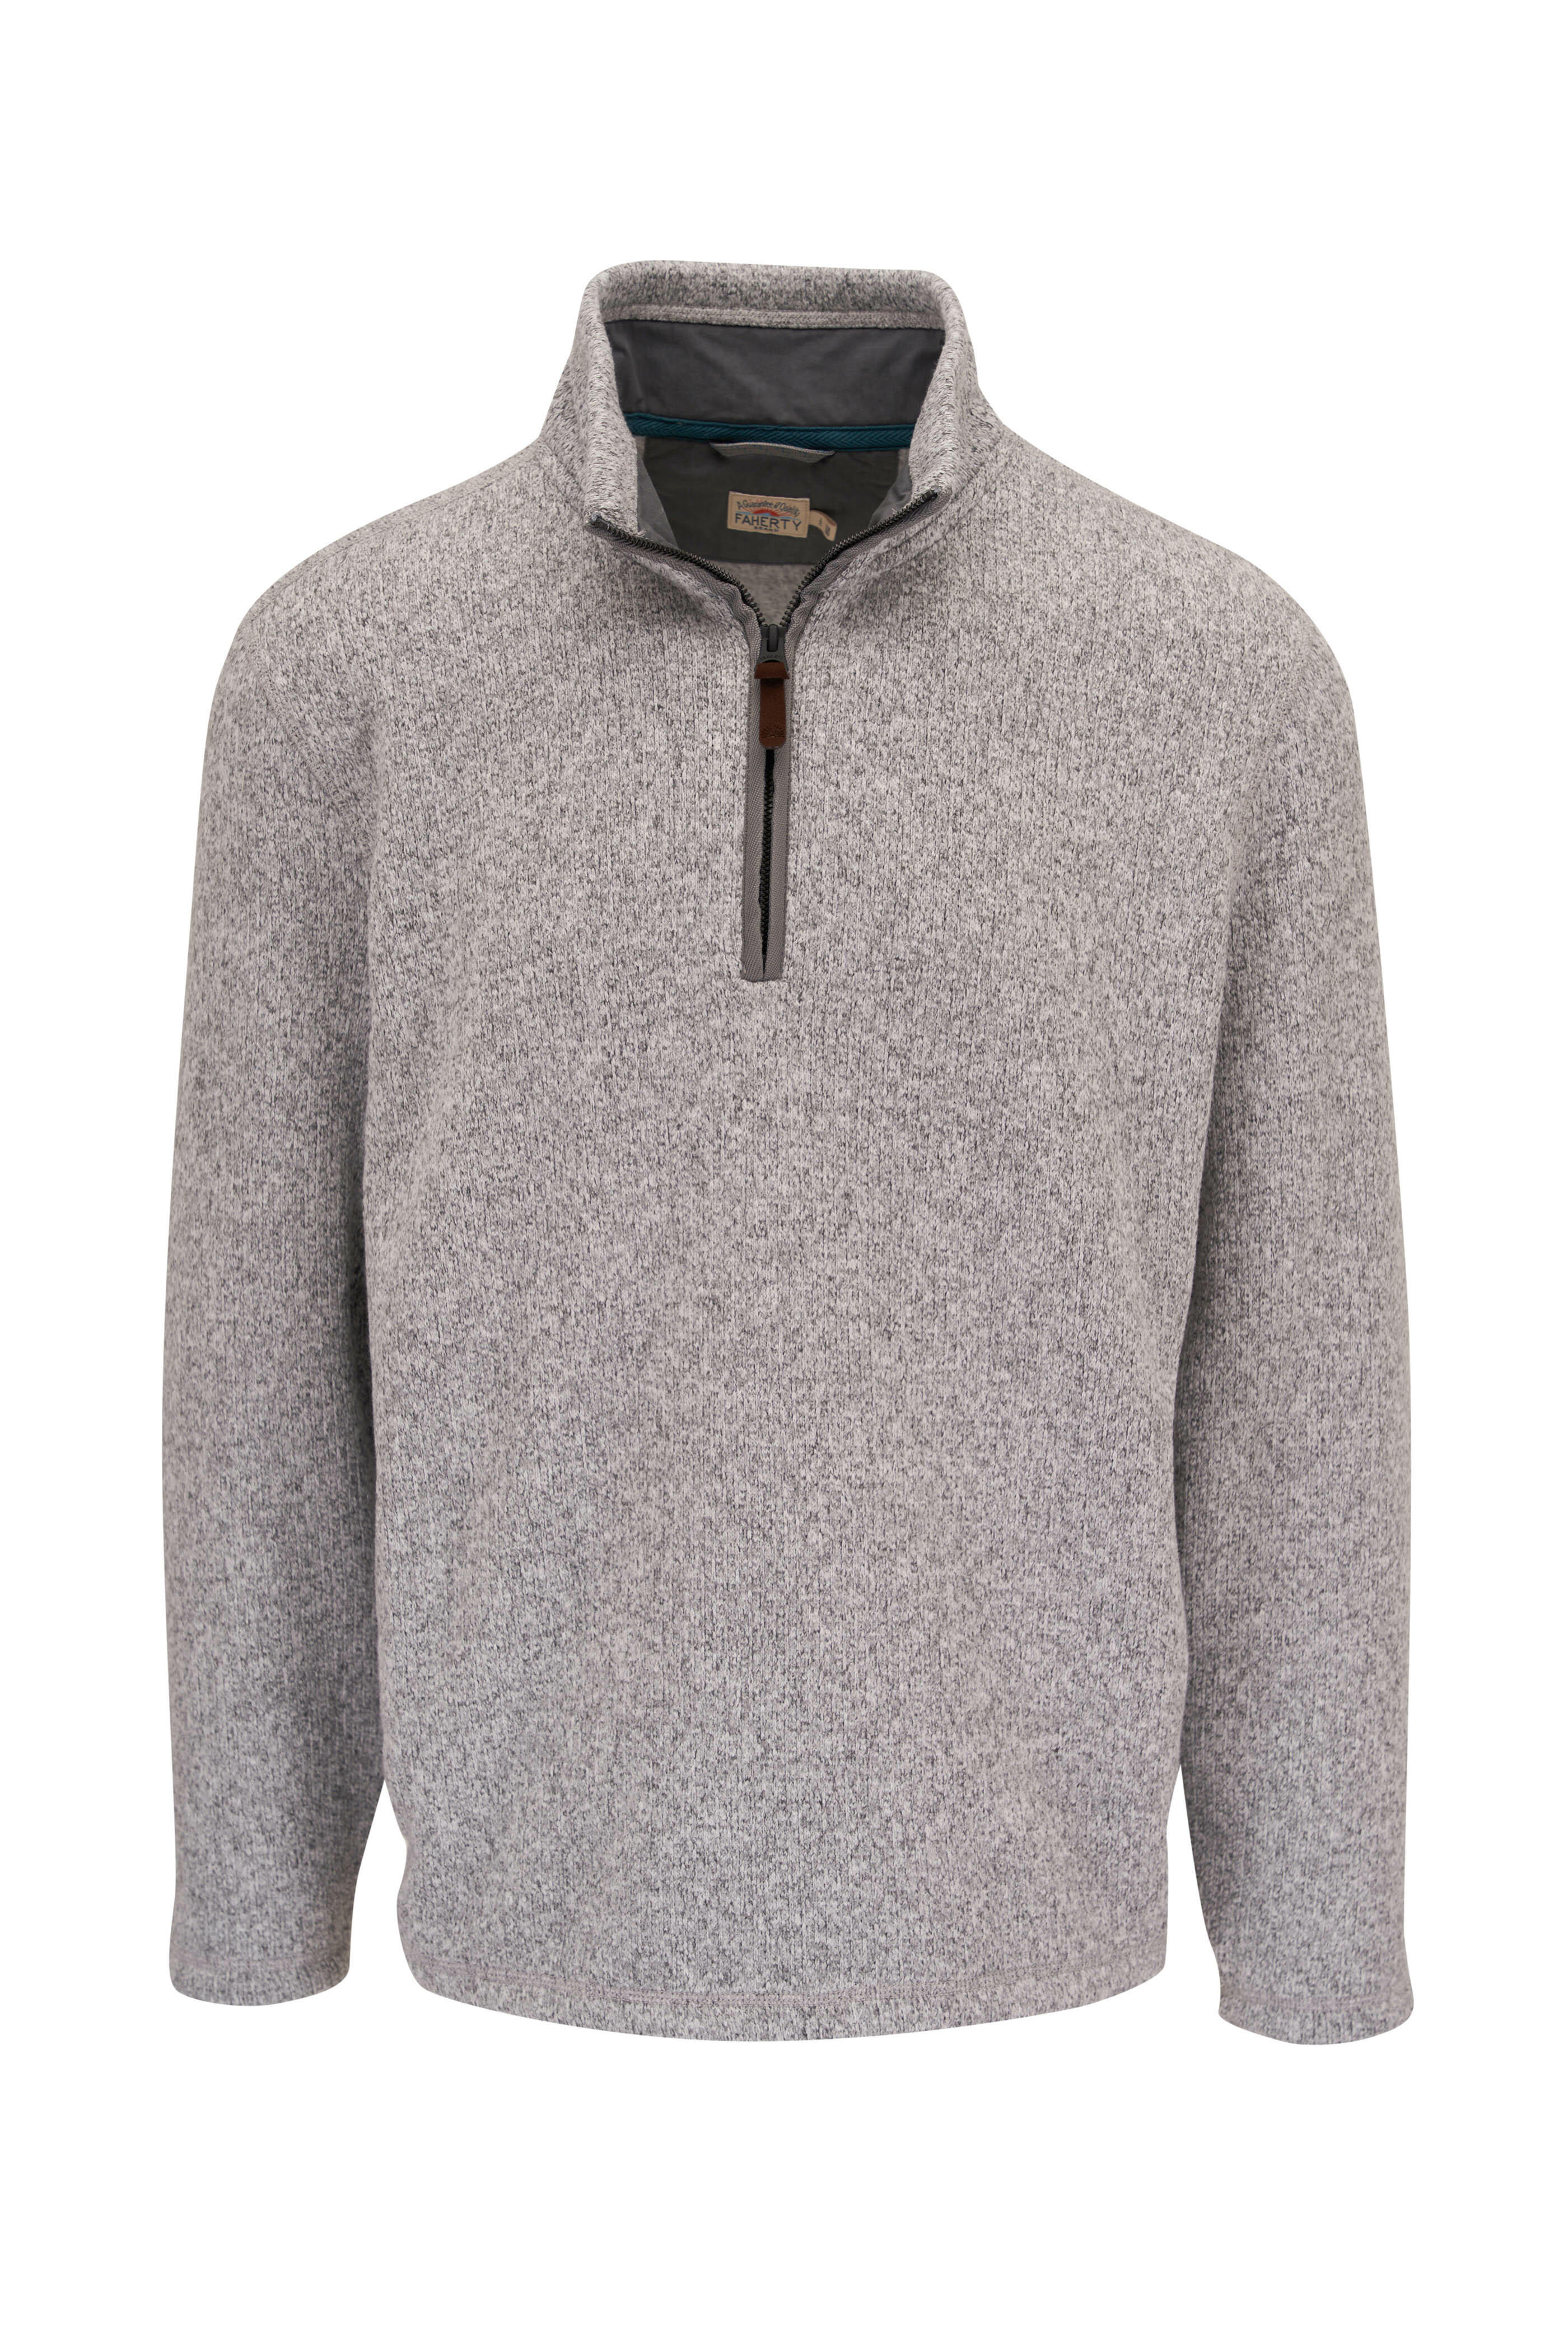 Faherty Brand - Light Granite Fleece Quarter Zip Pullover